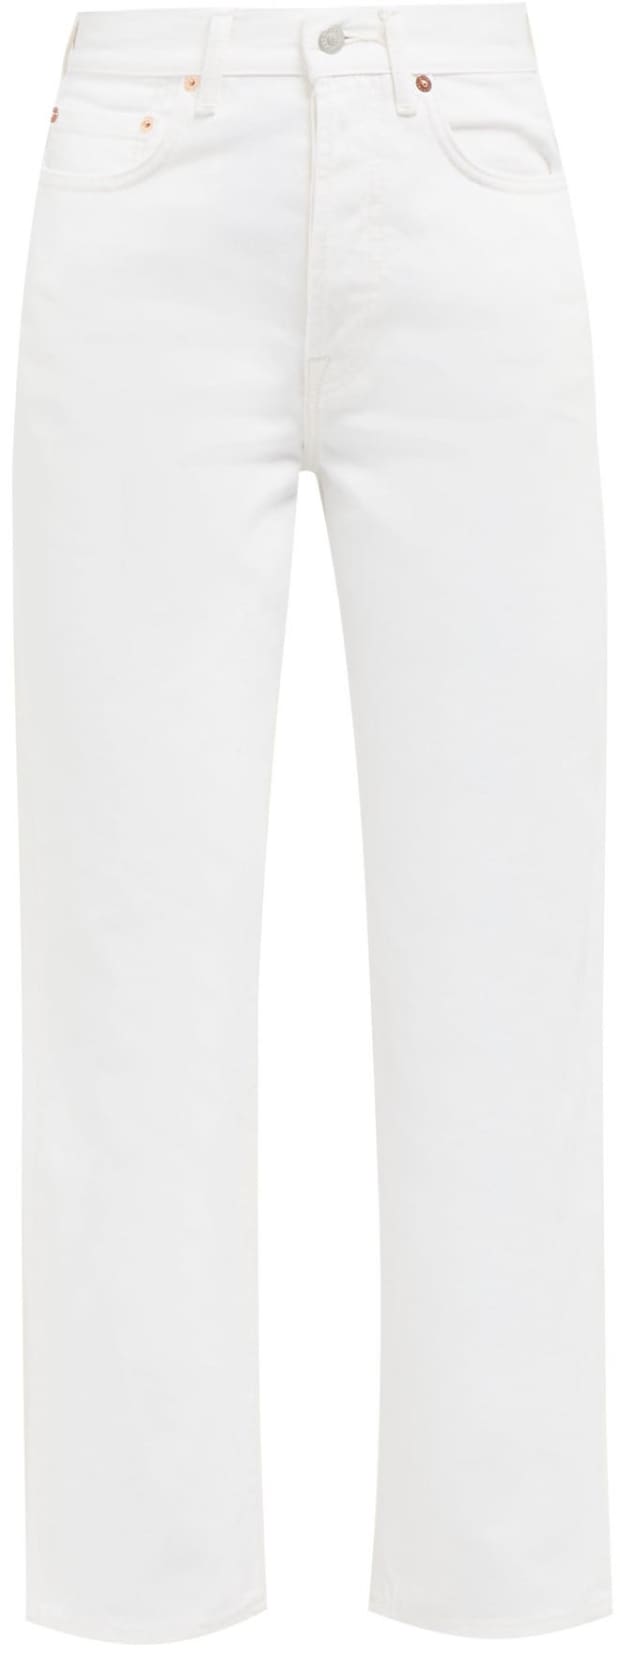 high rise white denim jeans